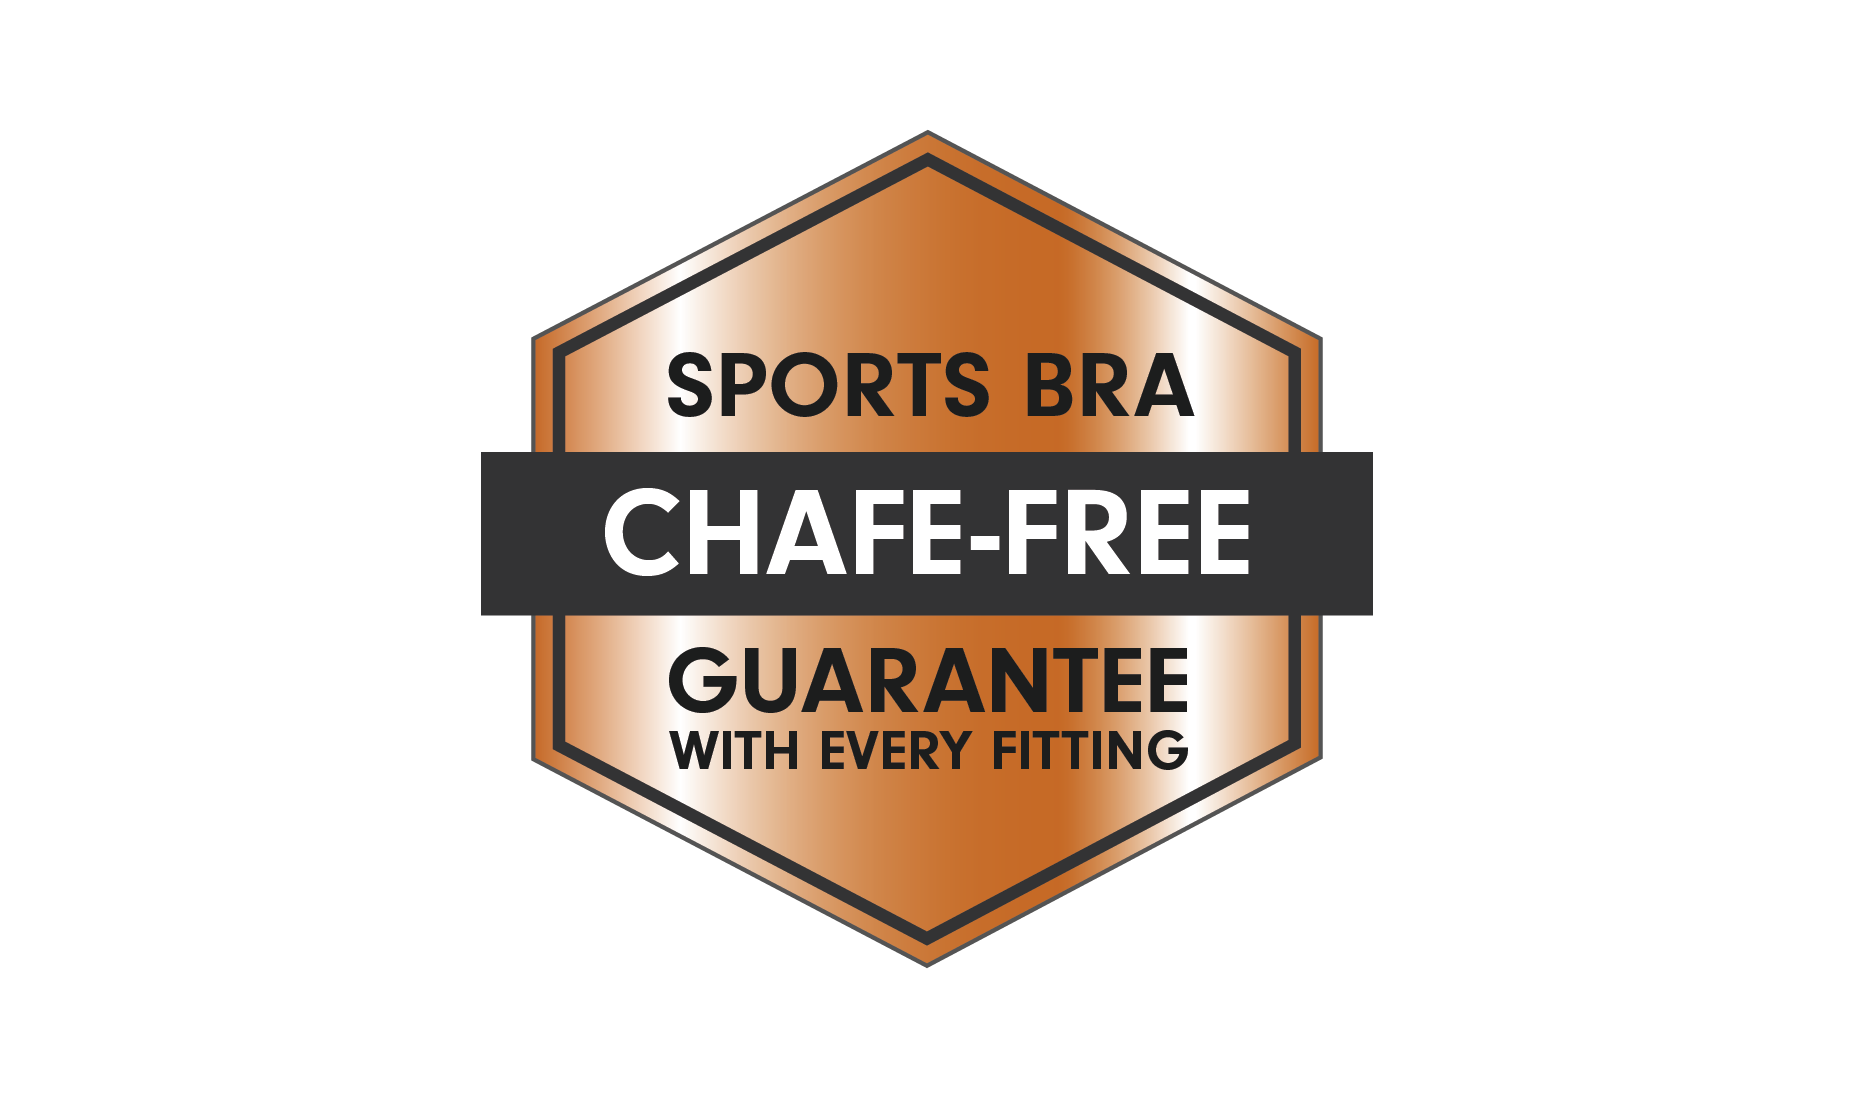 Maaree sports bra chafe-free guarantee badge